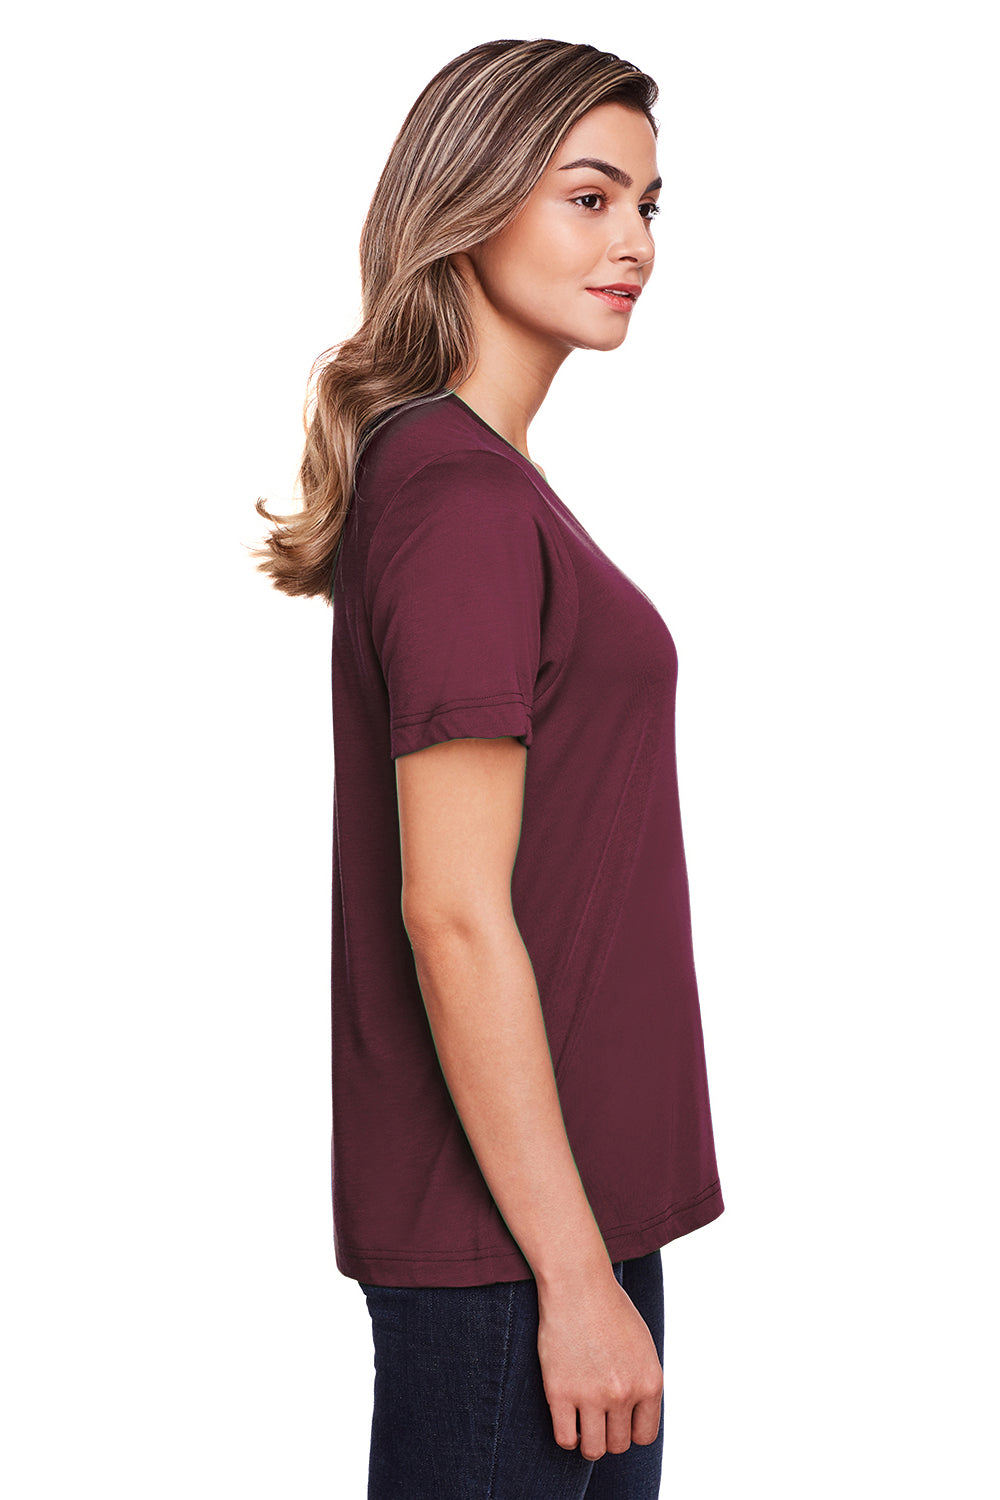 Core 365 CE111W Womens Fusion ChromaSoft Performance Moisture Wicking Short Sleeve Scoop Neck T-Shirt Burgundy Side